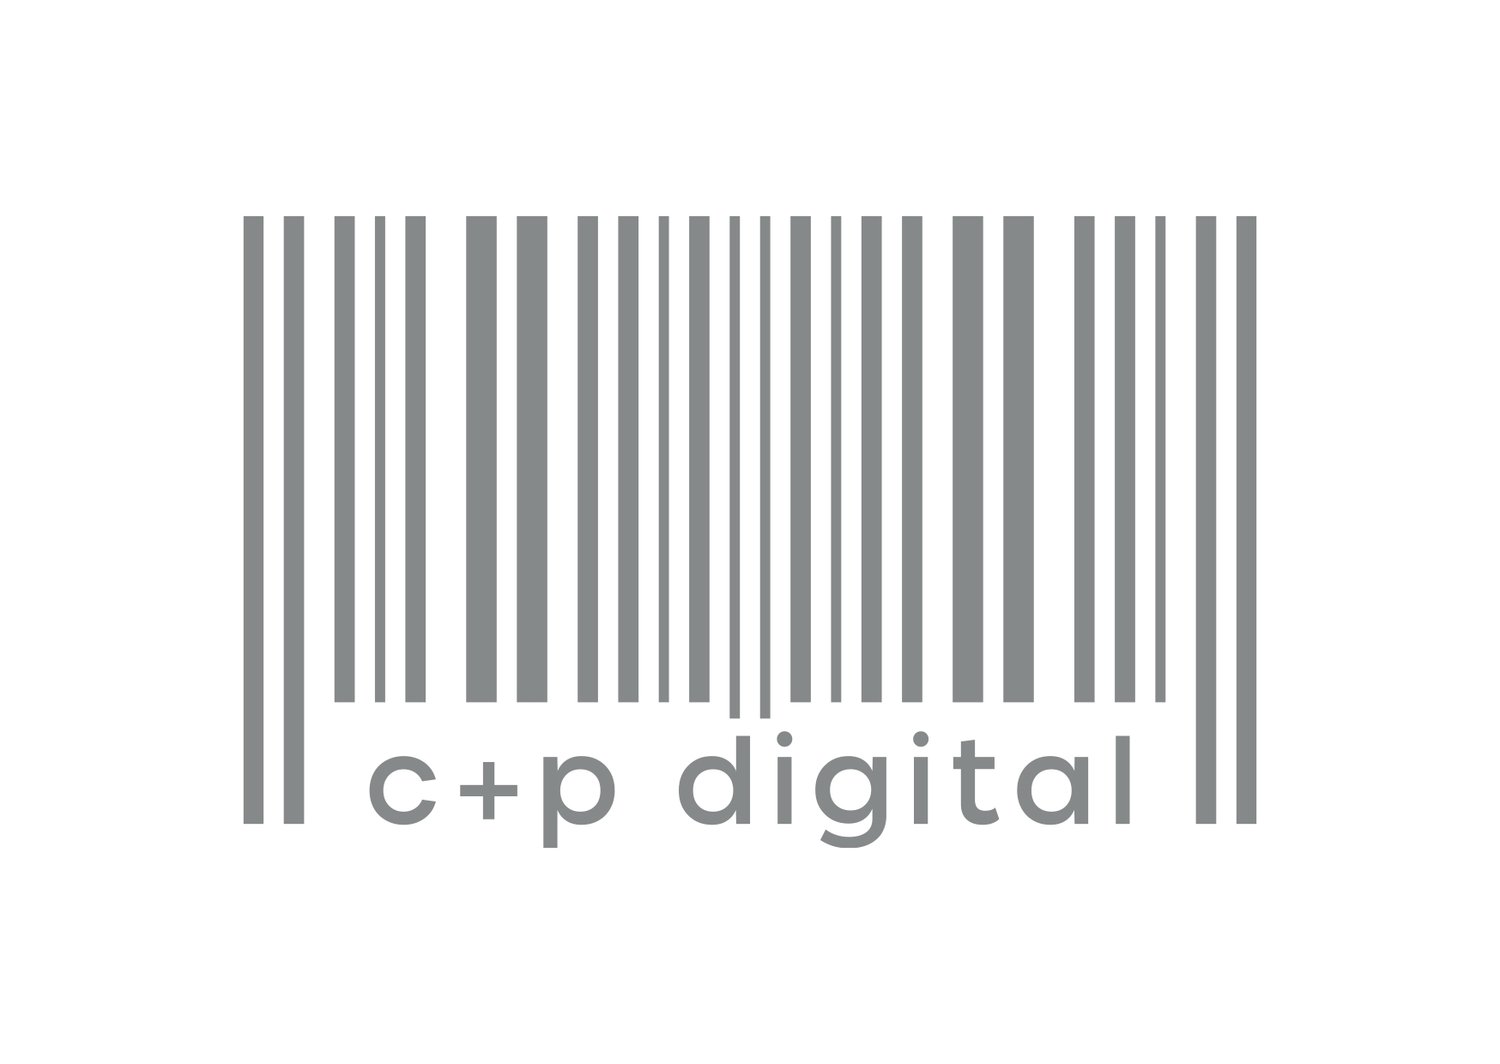 c+p digital